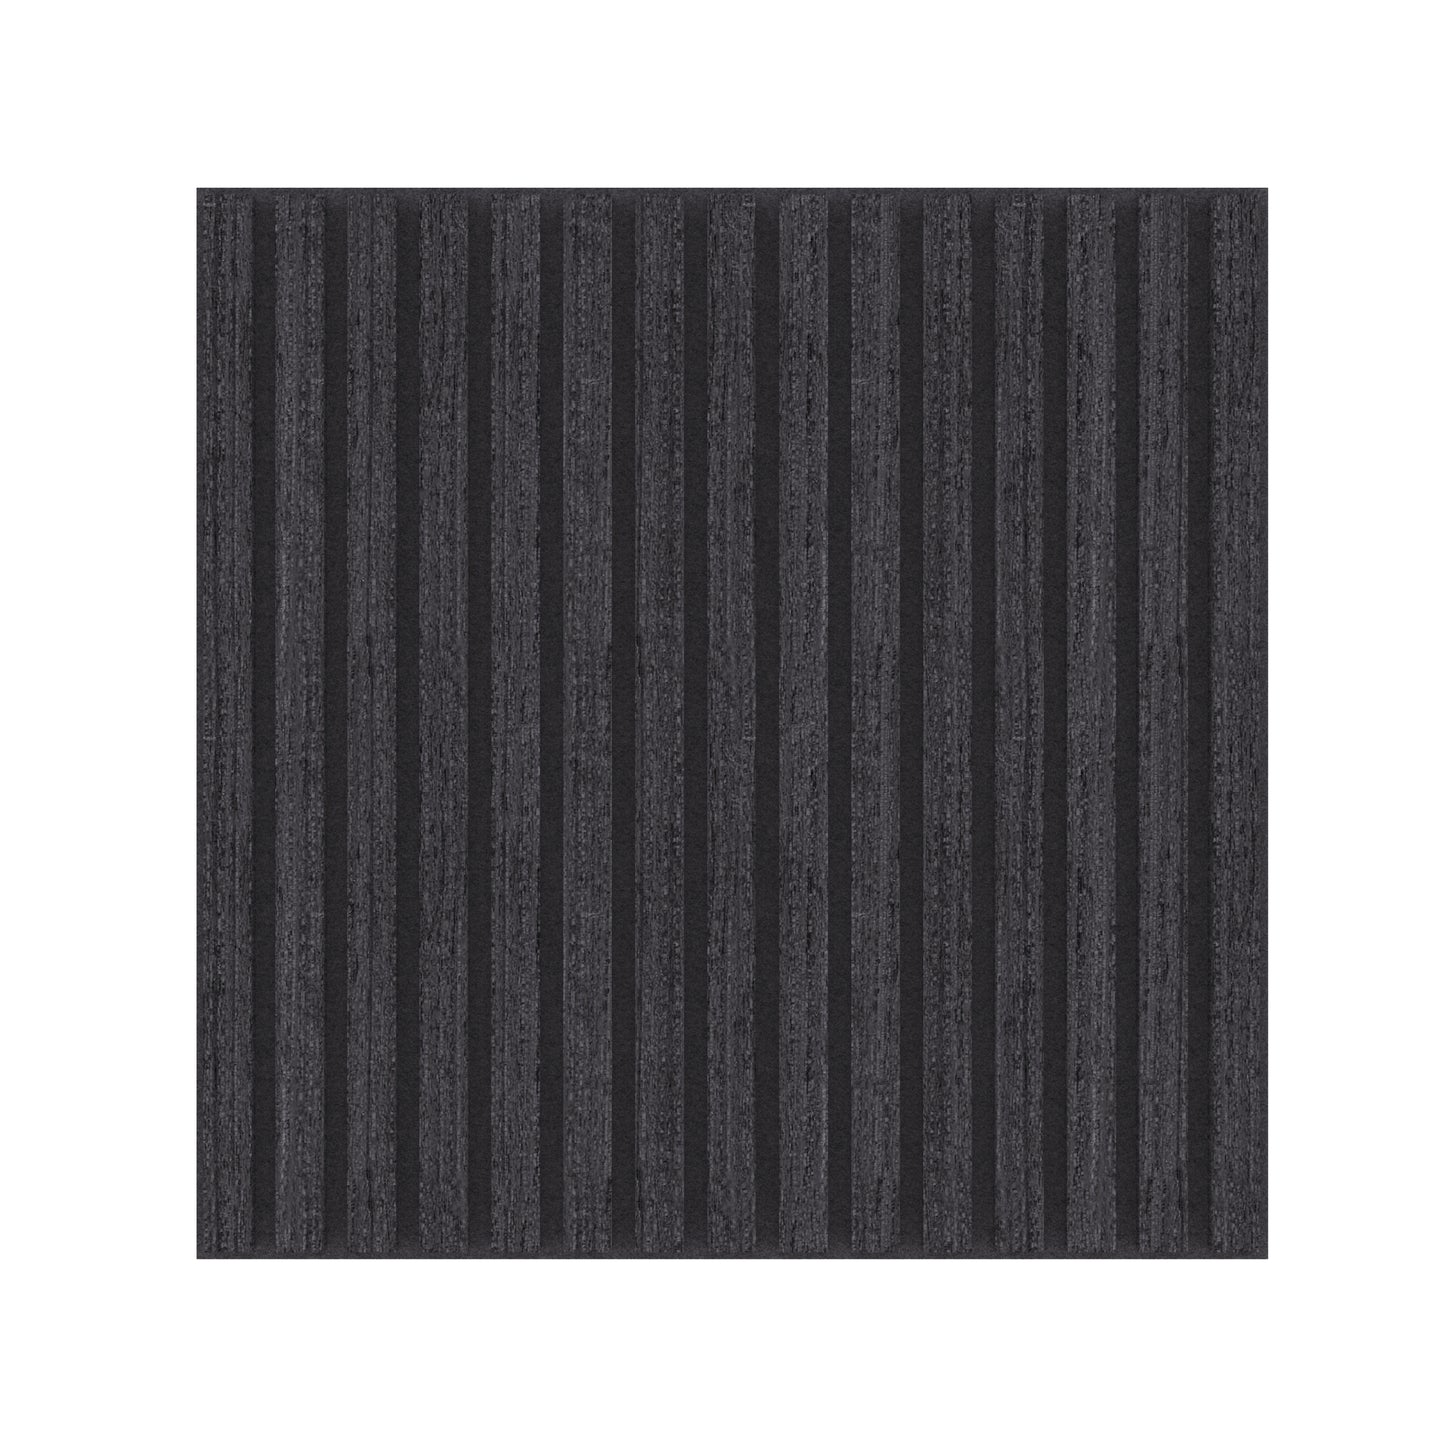 Black Acoustic Wood Wall Panel Tiles Series 1 - 60x60cm (4 Pack)